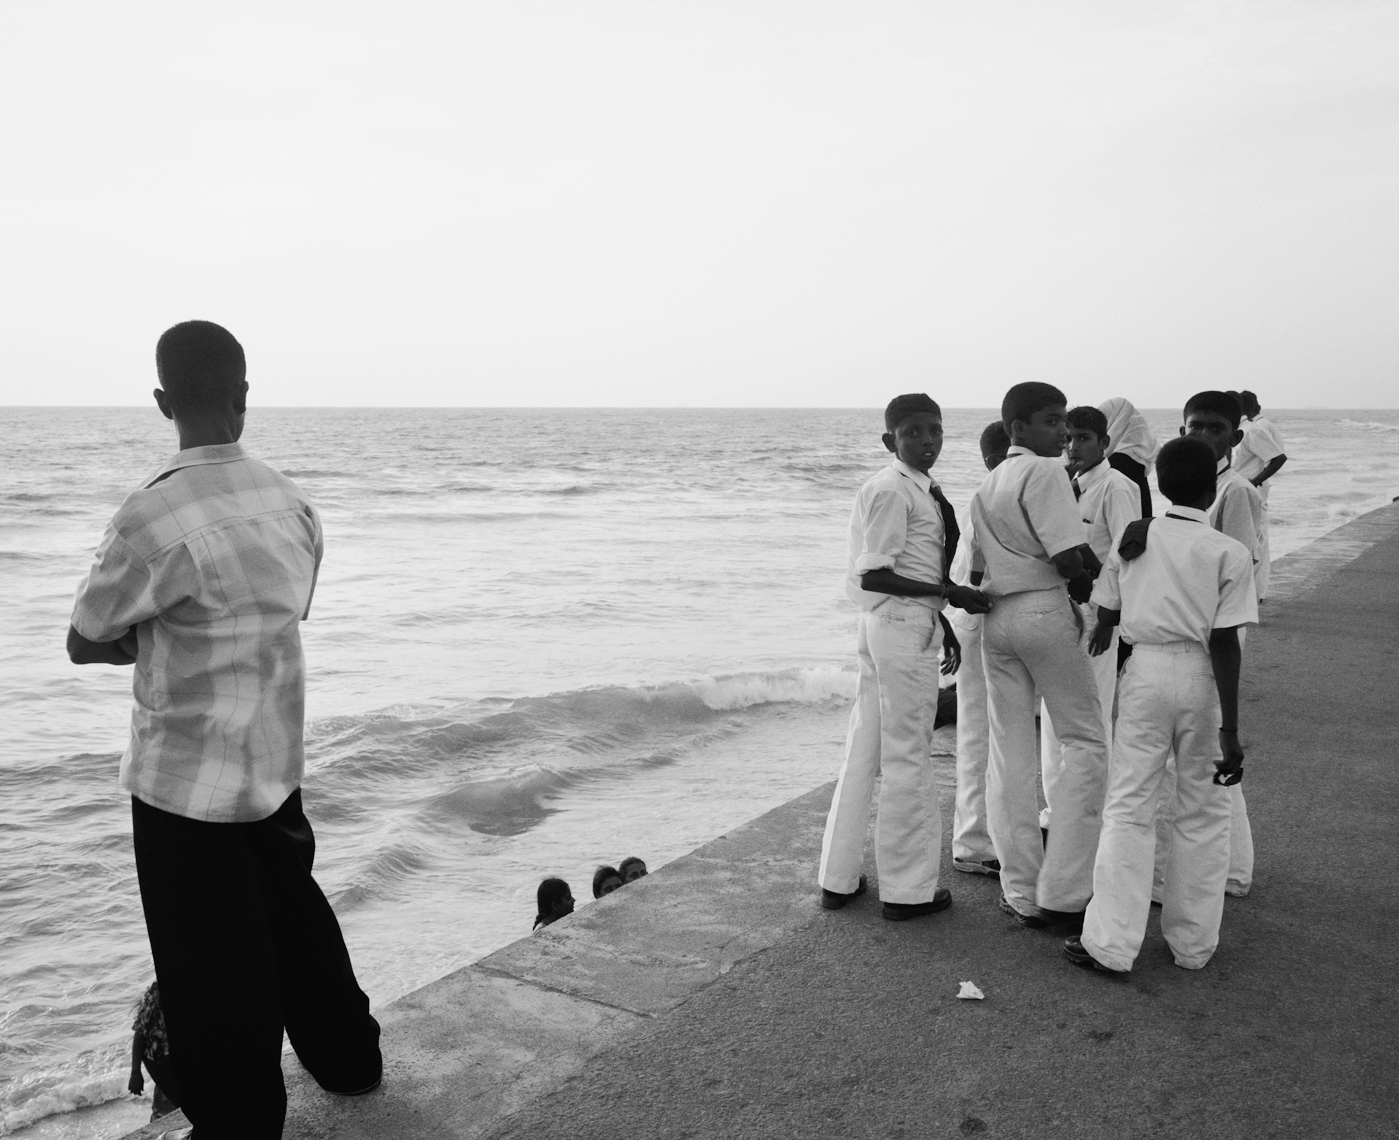 SRI LANKA Asia, Colombo, school boys standing by the beach in Colombo.